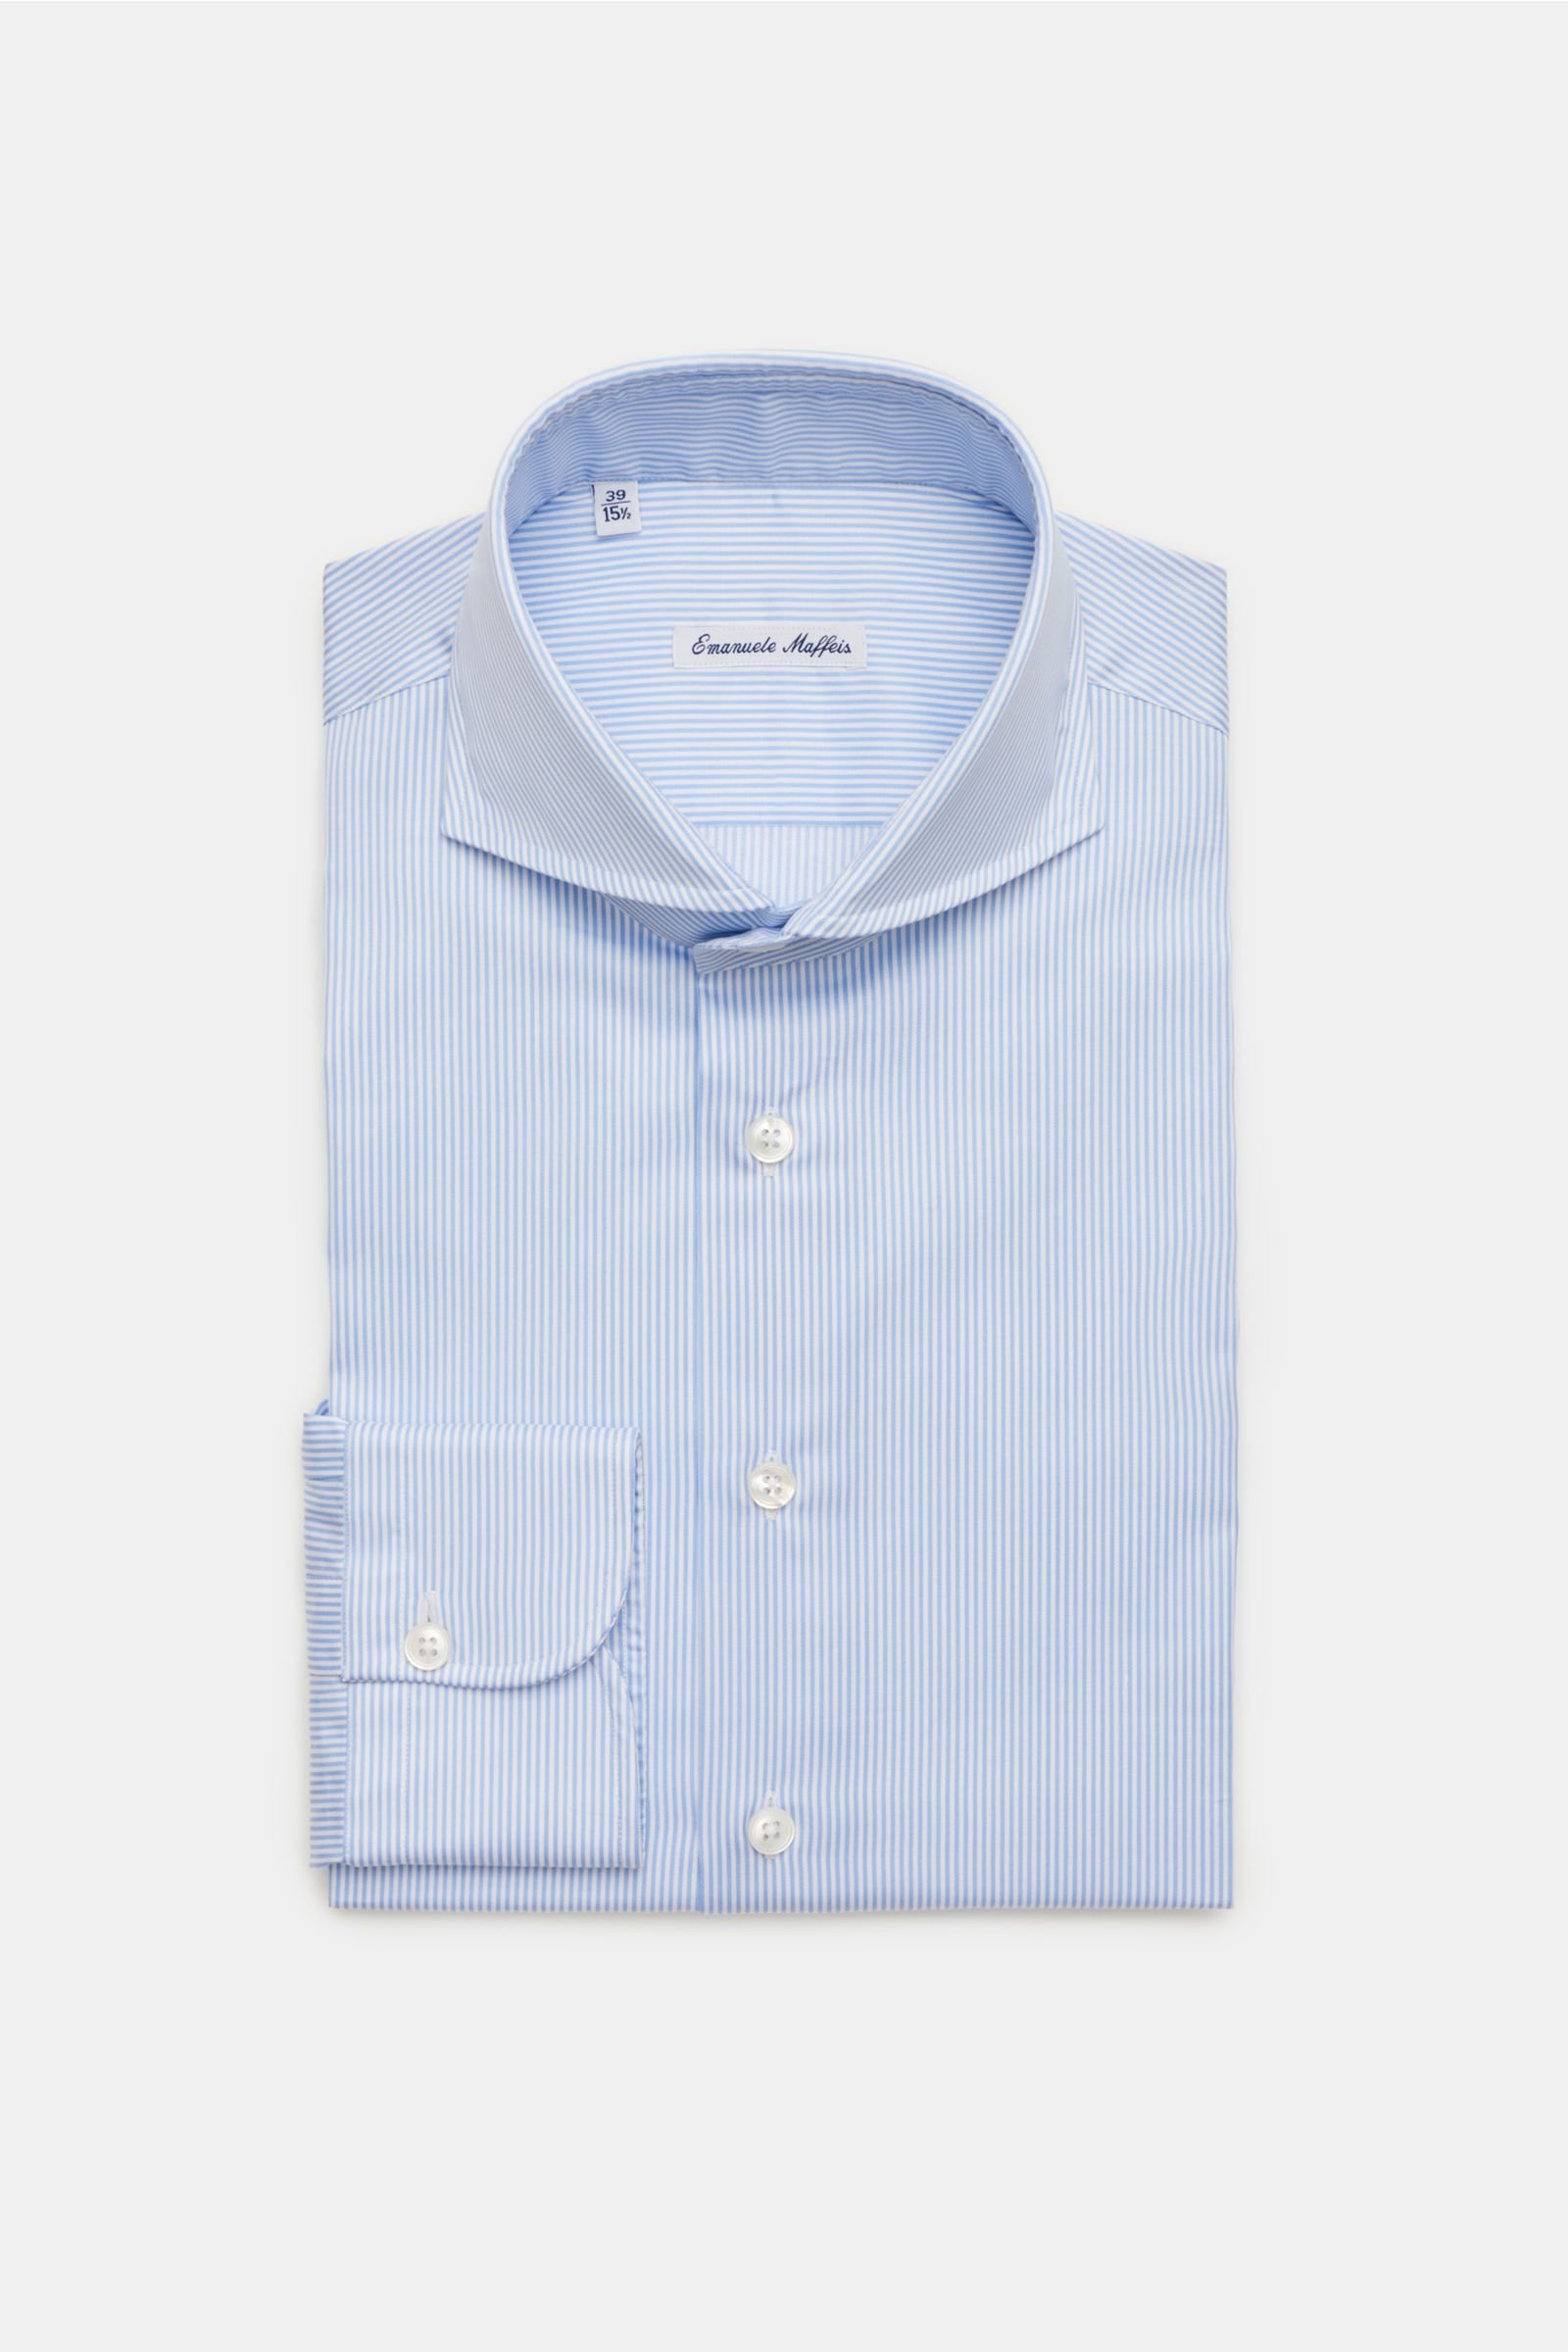 Business shirt 'Nelly' shark collar smoky blue/white striped